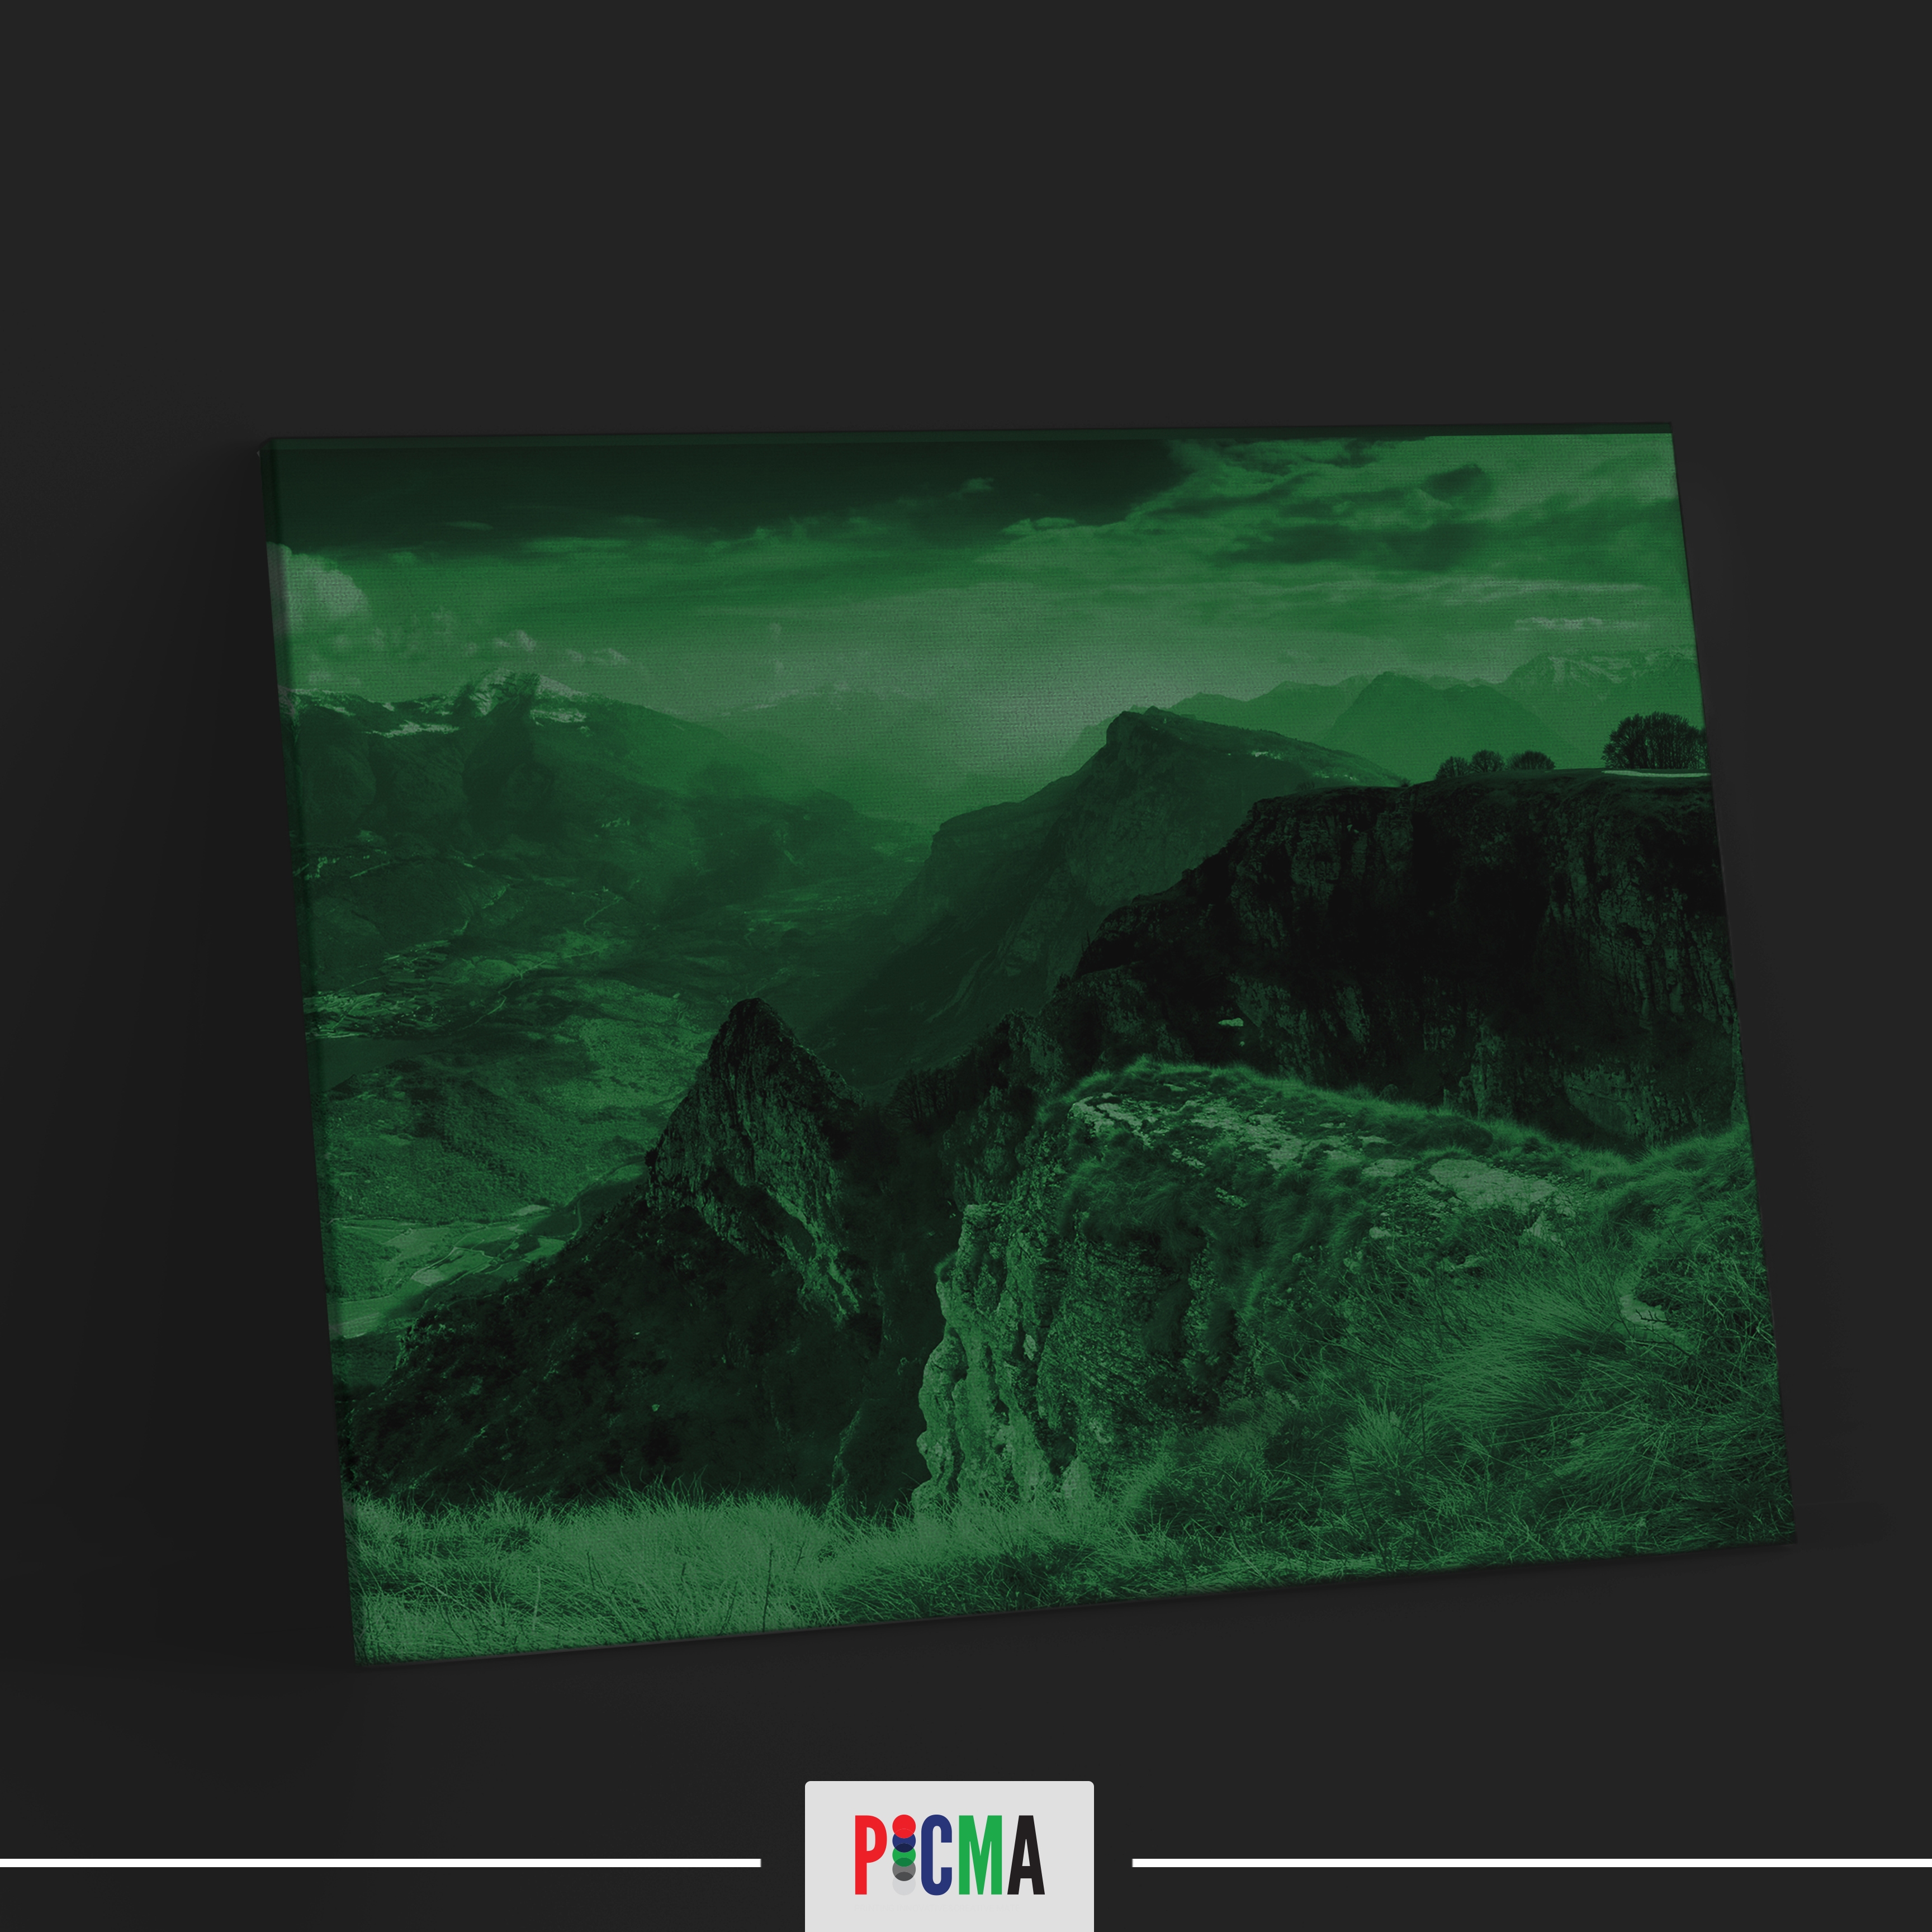 Tablou canvas luminos Peisaj montan, Picma, dualview, panza + sasiu lemn, 80 x 120 cm